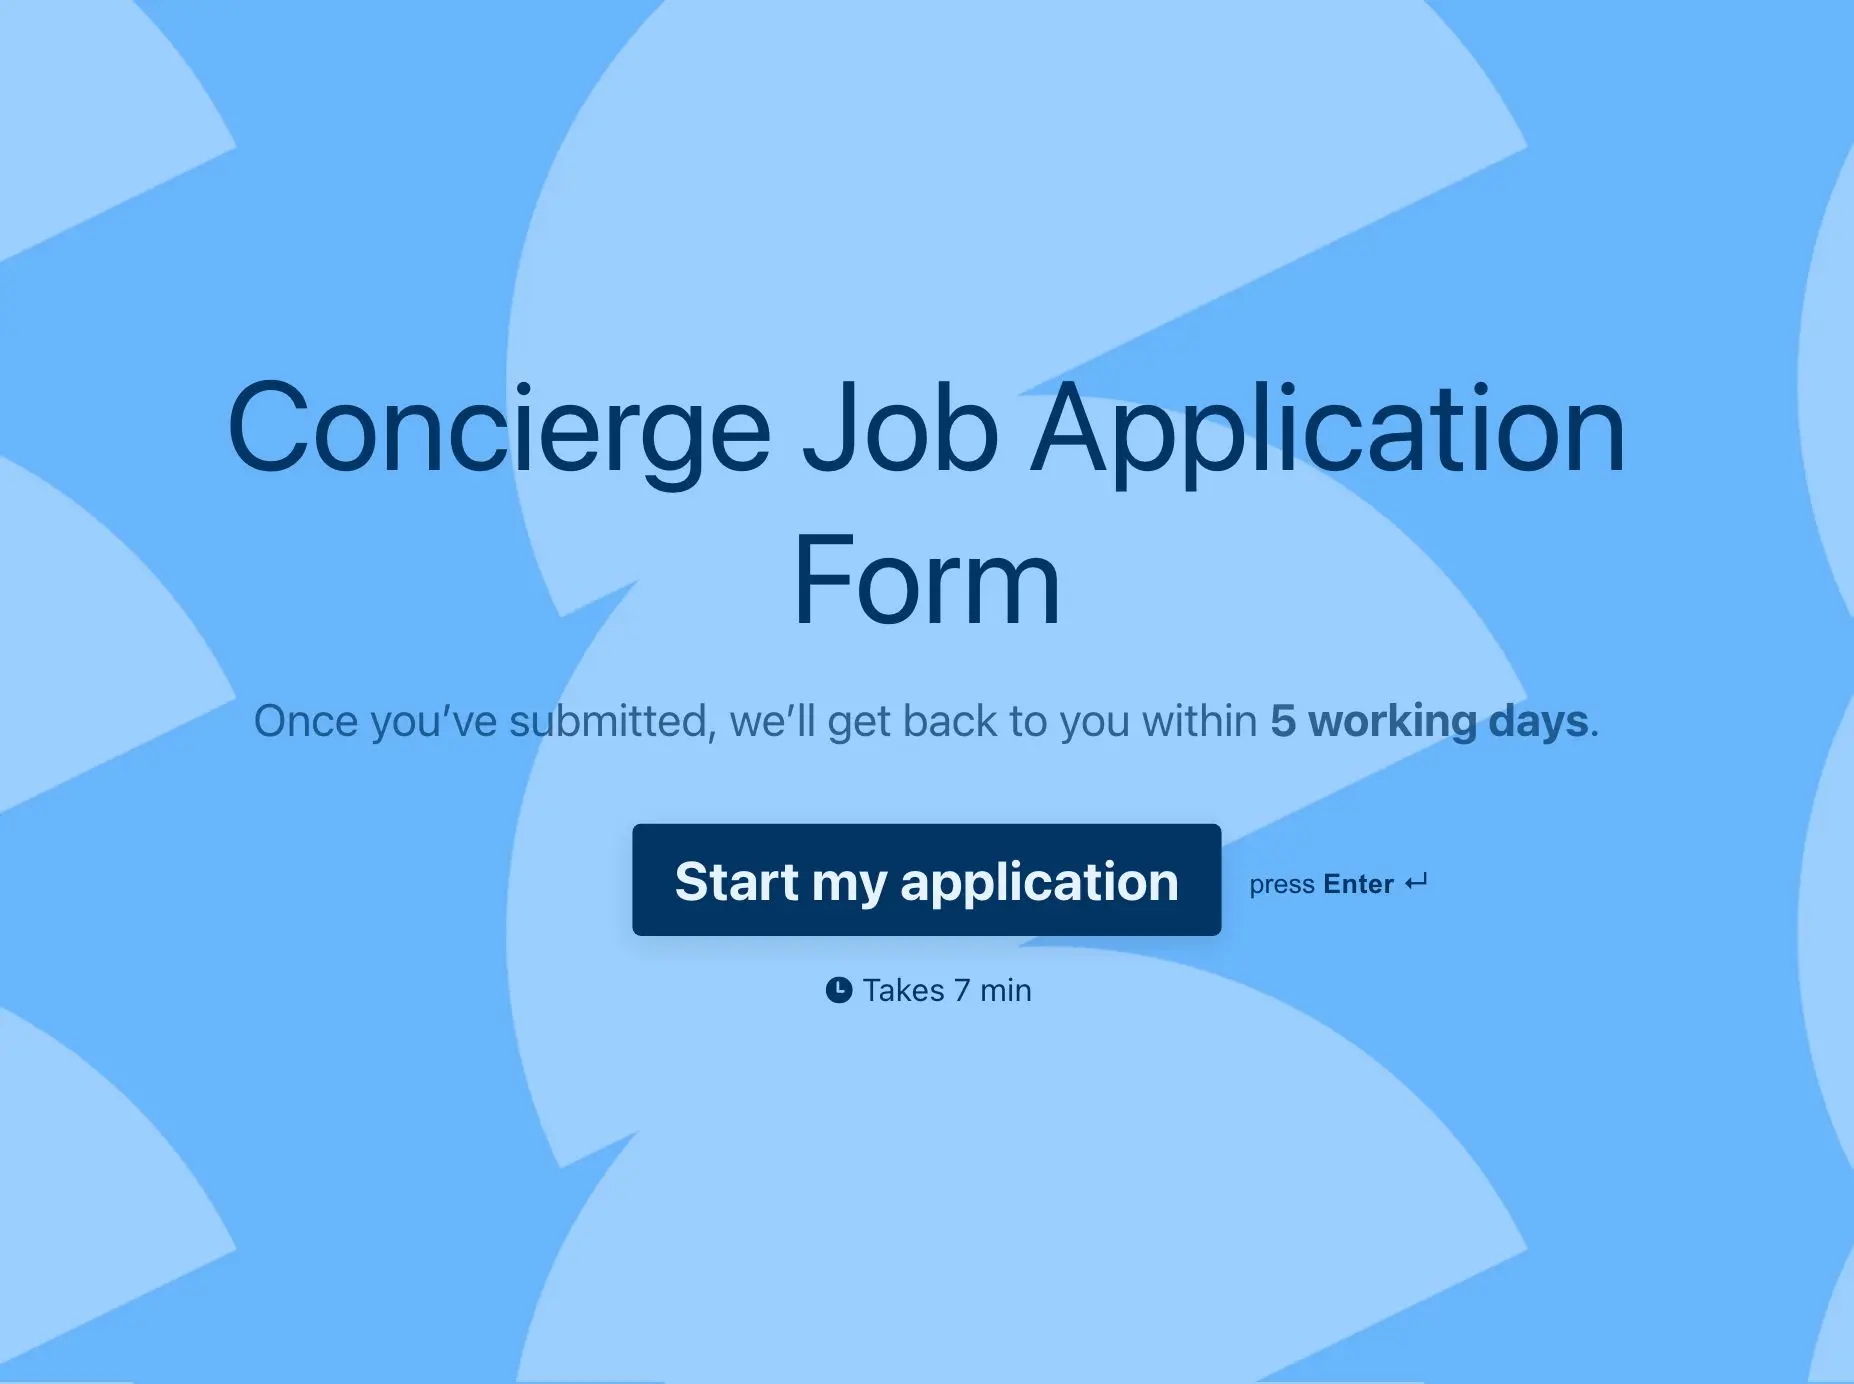 Concierge Job Application Form Template Hero